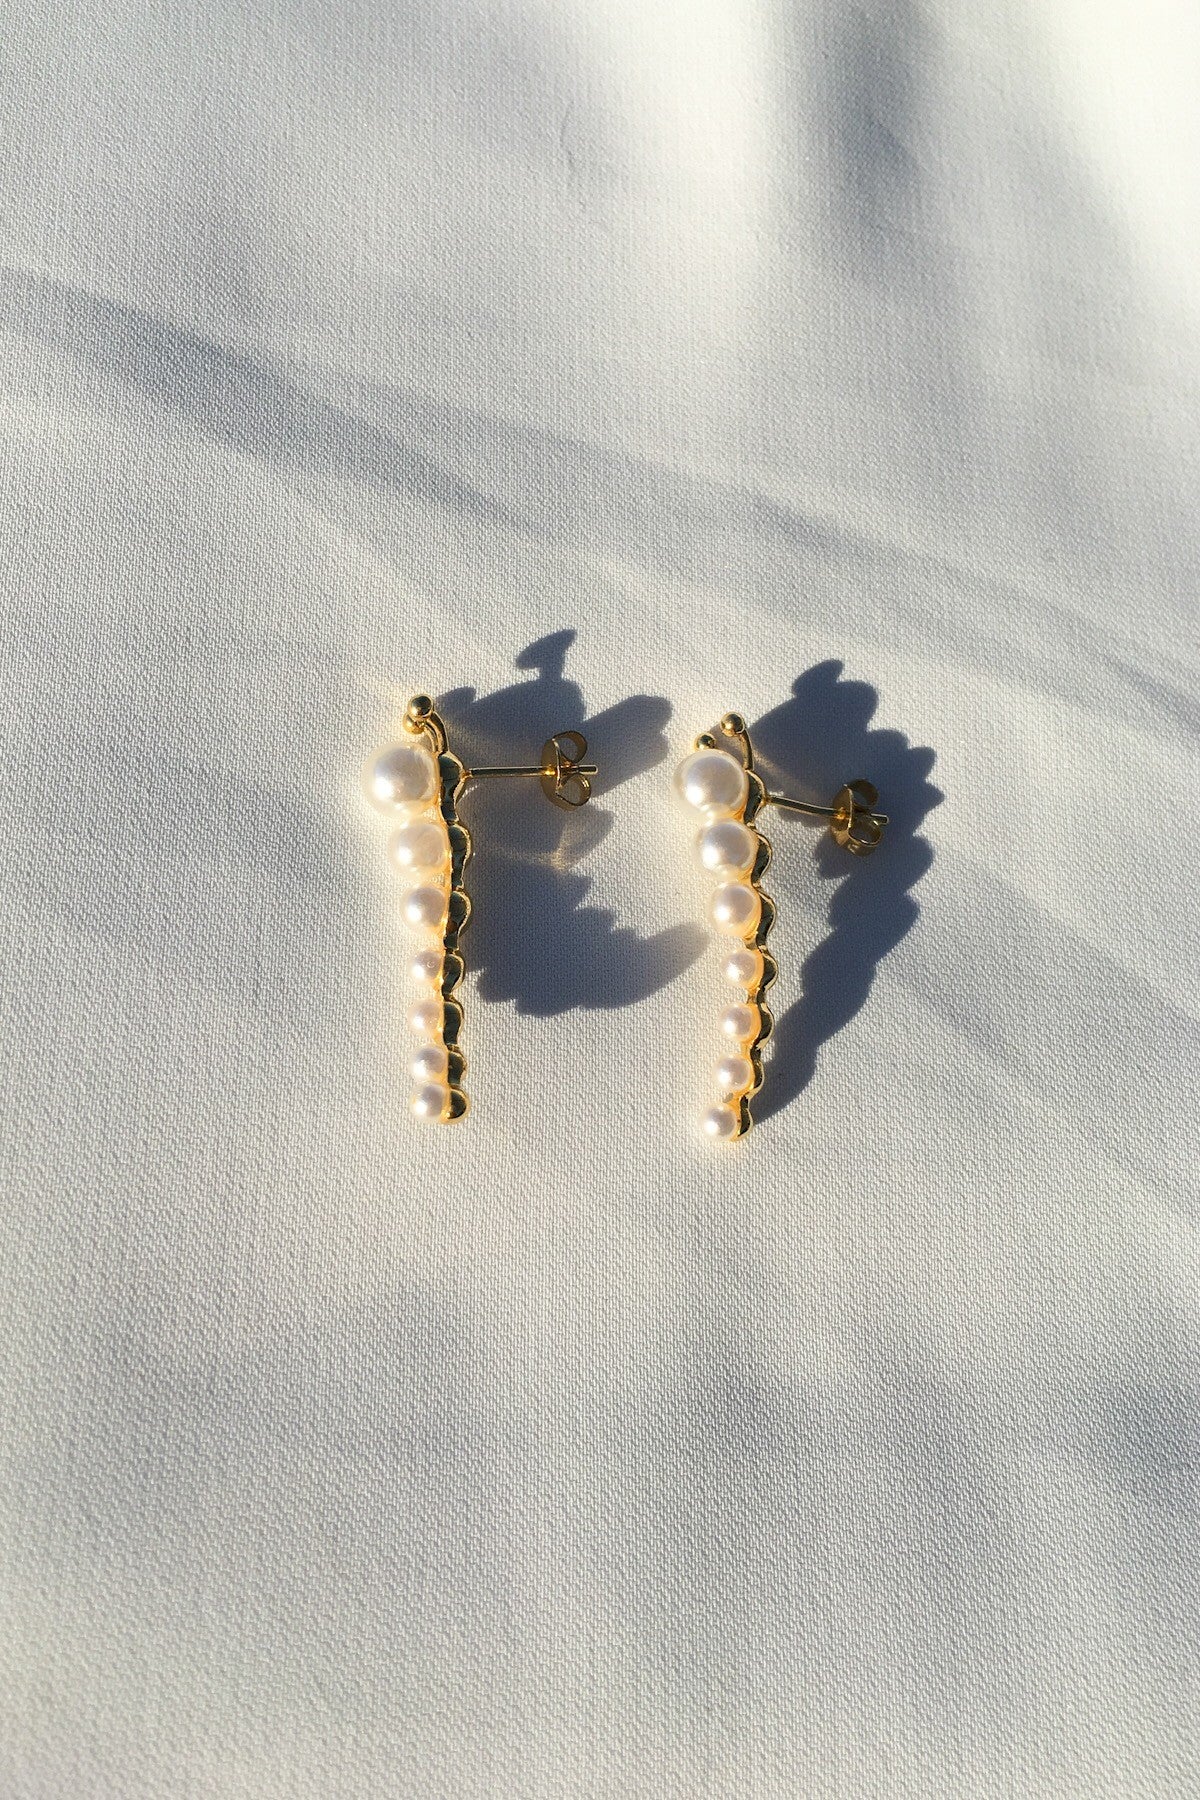 SKYE San Francisco SF ethical sustainable modern minimalist women fashion accessories Zelia 18K Gold Pearl Caterpillar Earrings 4